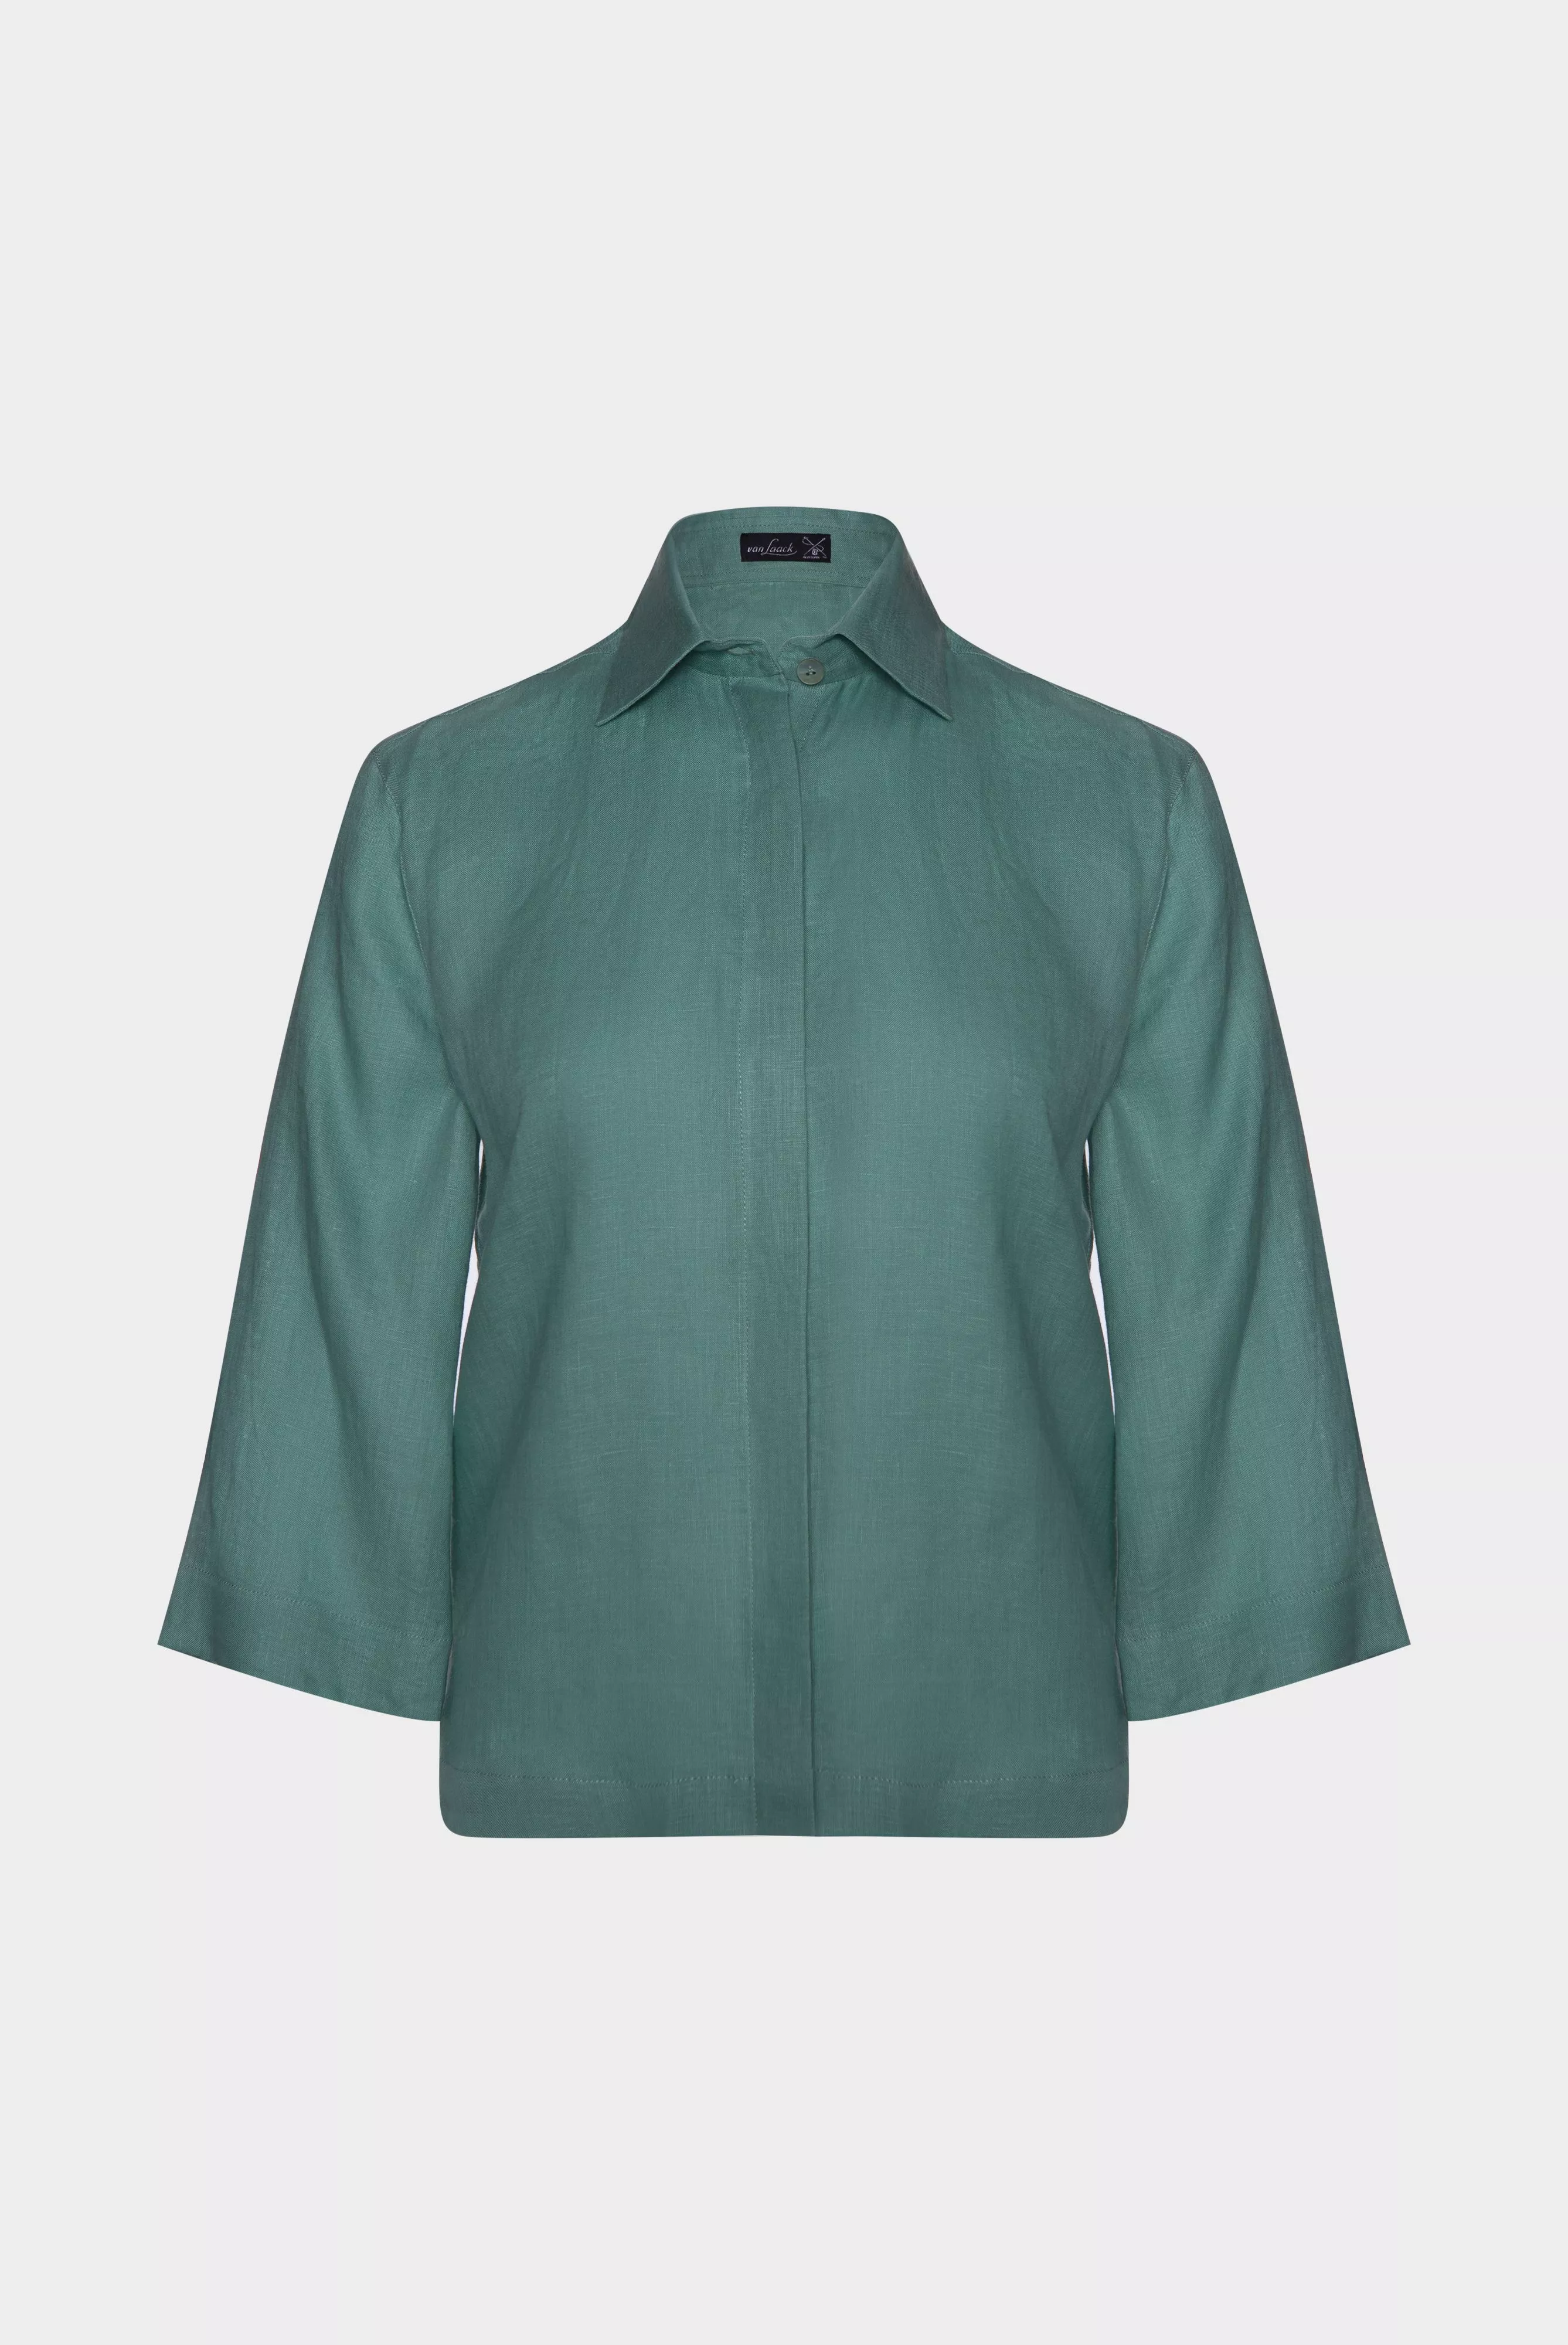 блузка BELIZ SVKN светло-зеленый BELIZ-SVKN_150555_920 ,photo 1